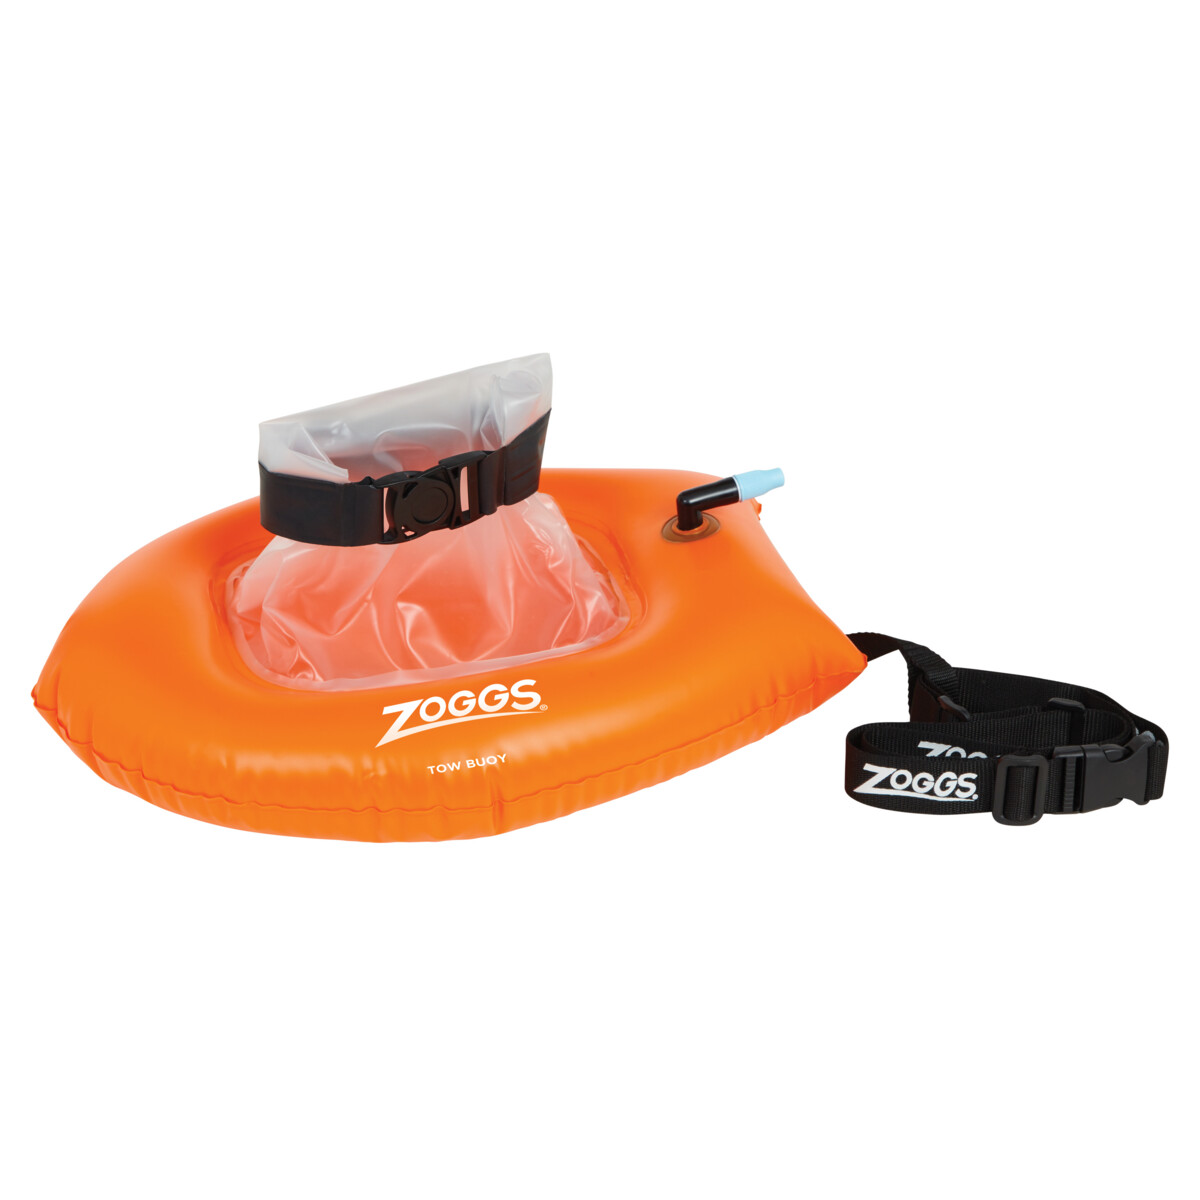 Zoggs Tow Float Plus